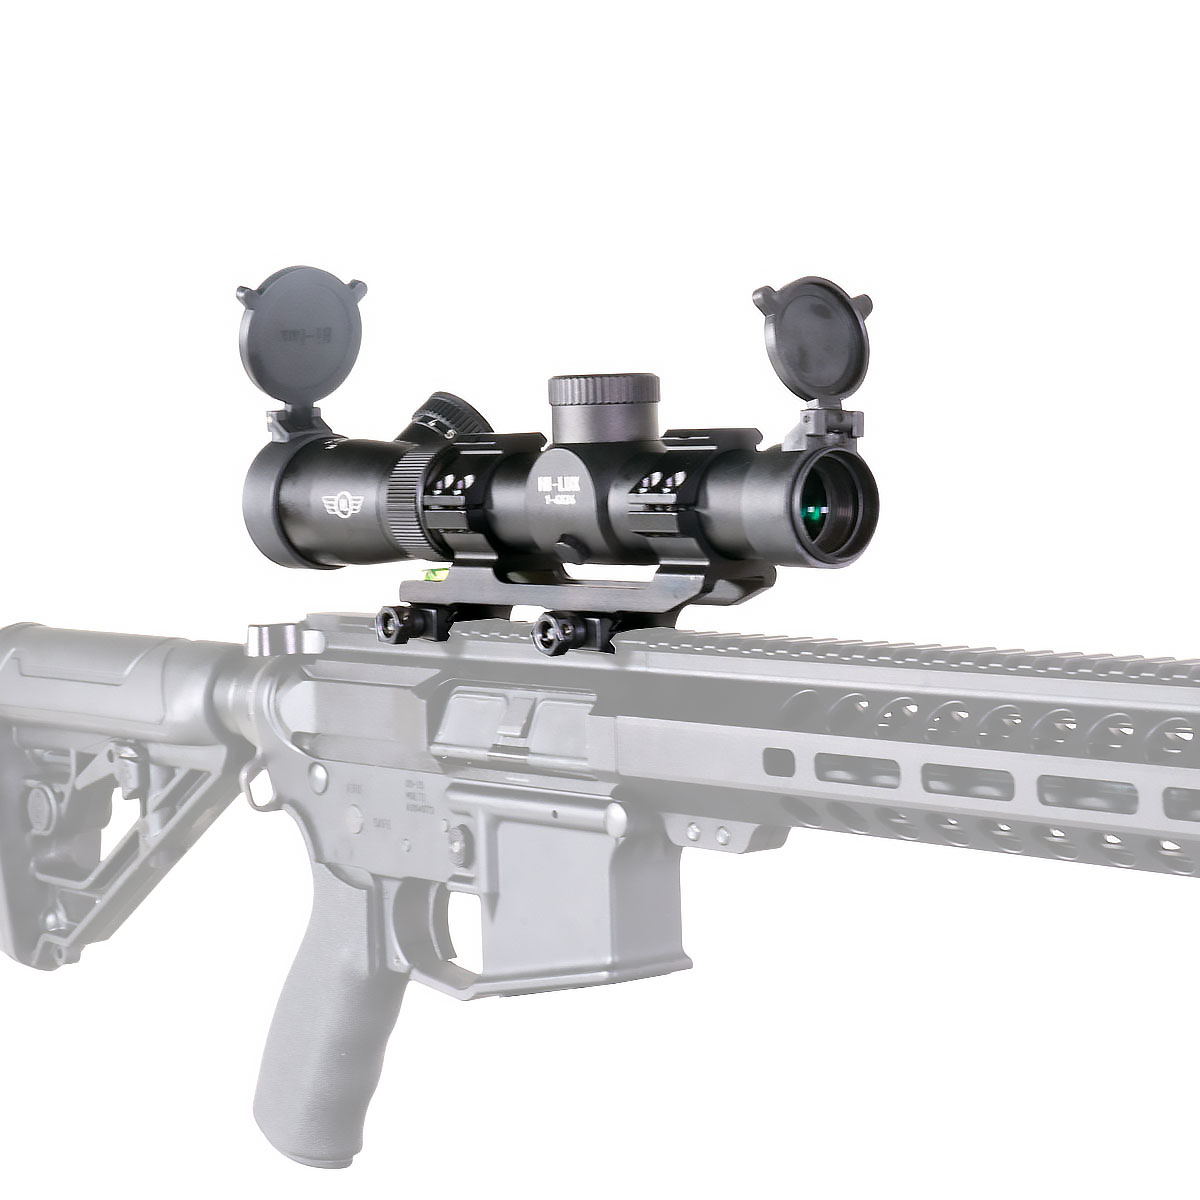 Range Loadout: CMR4 1-4X24 LPVO Rifle Scope + Cantilever 30mm Scope Mount